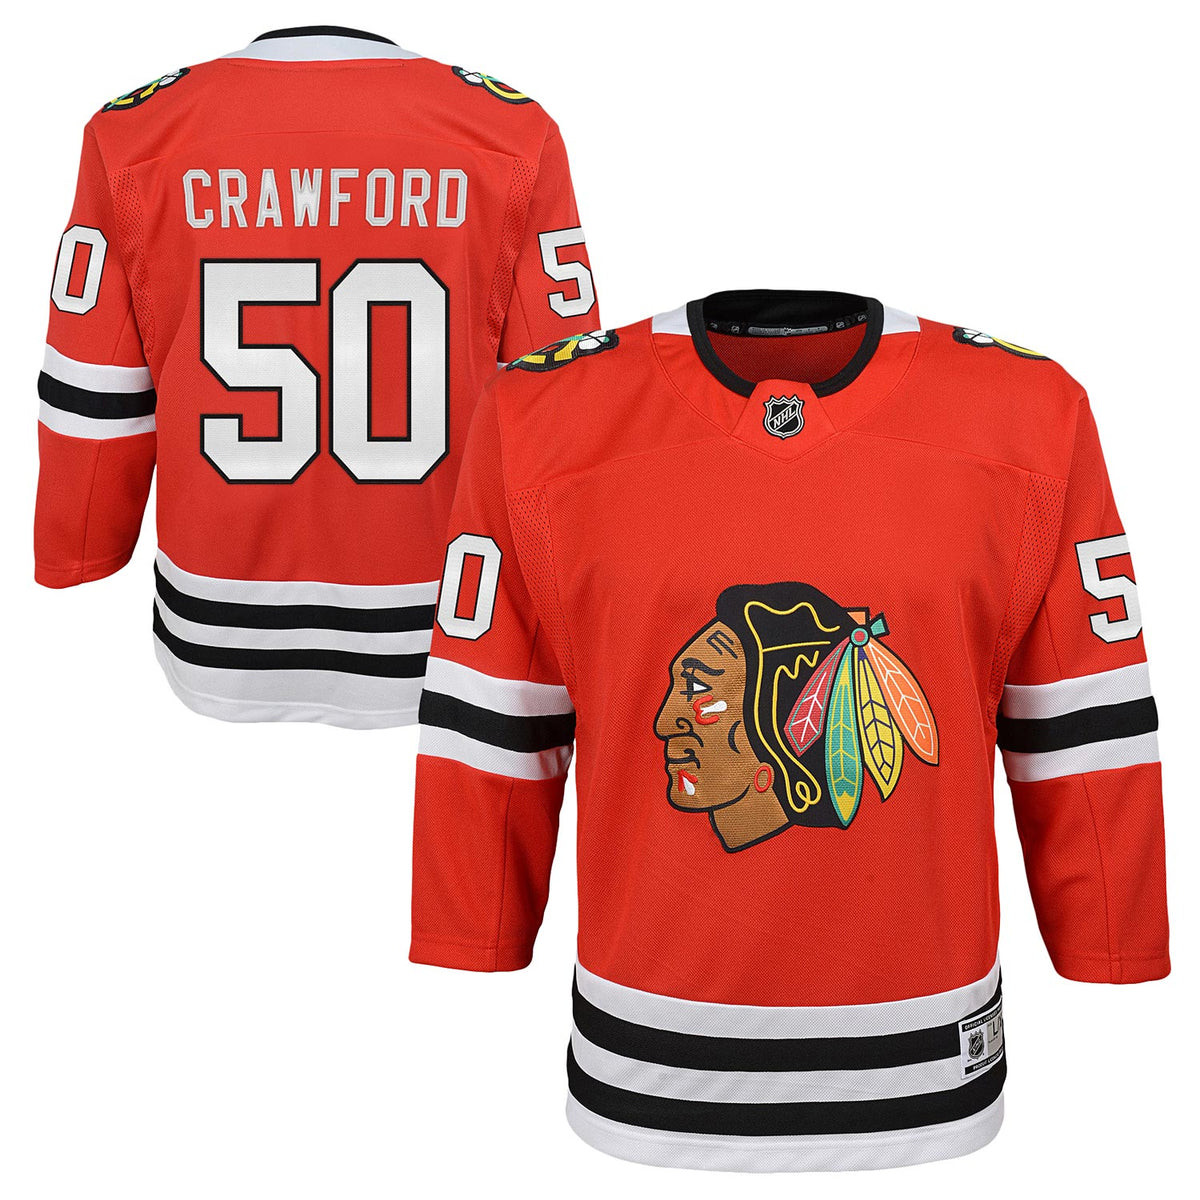 COREY CRAWFORD signed Chicago Blackhawks Red Adidas PRO Jersey